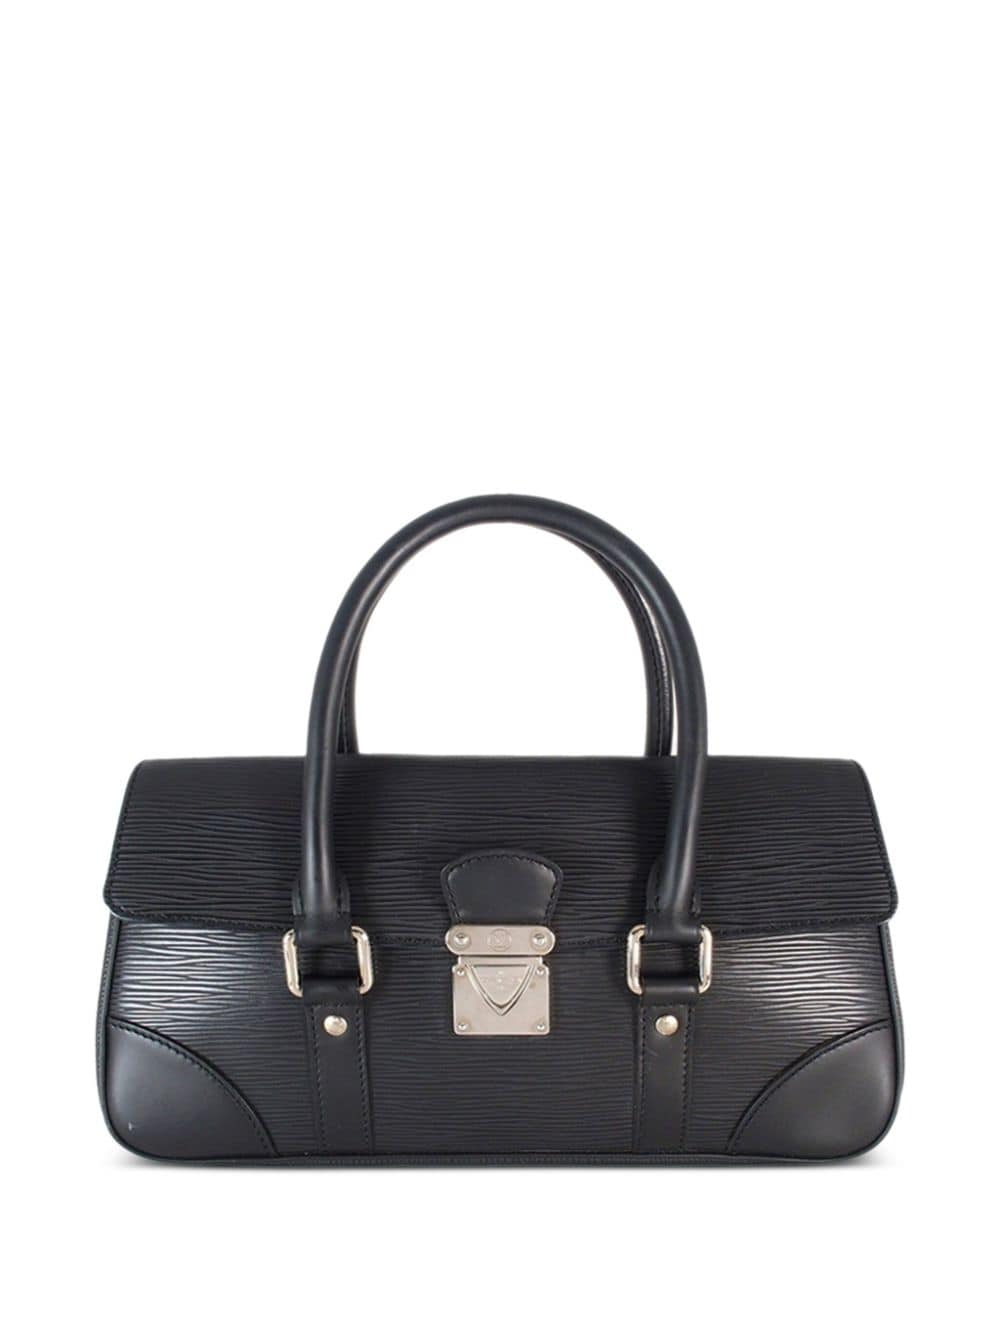 Pre-owned Louis Vuitton 2005 Segur Pm Tote Bag In Black